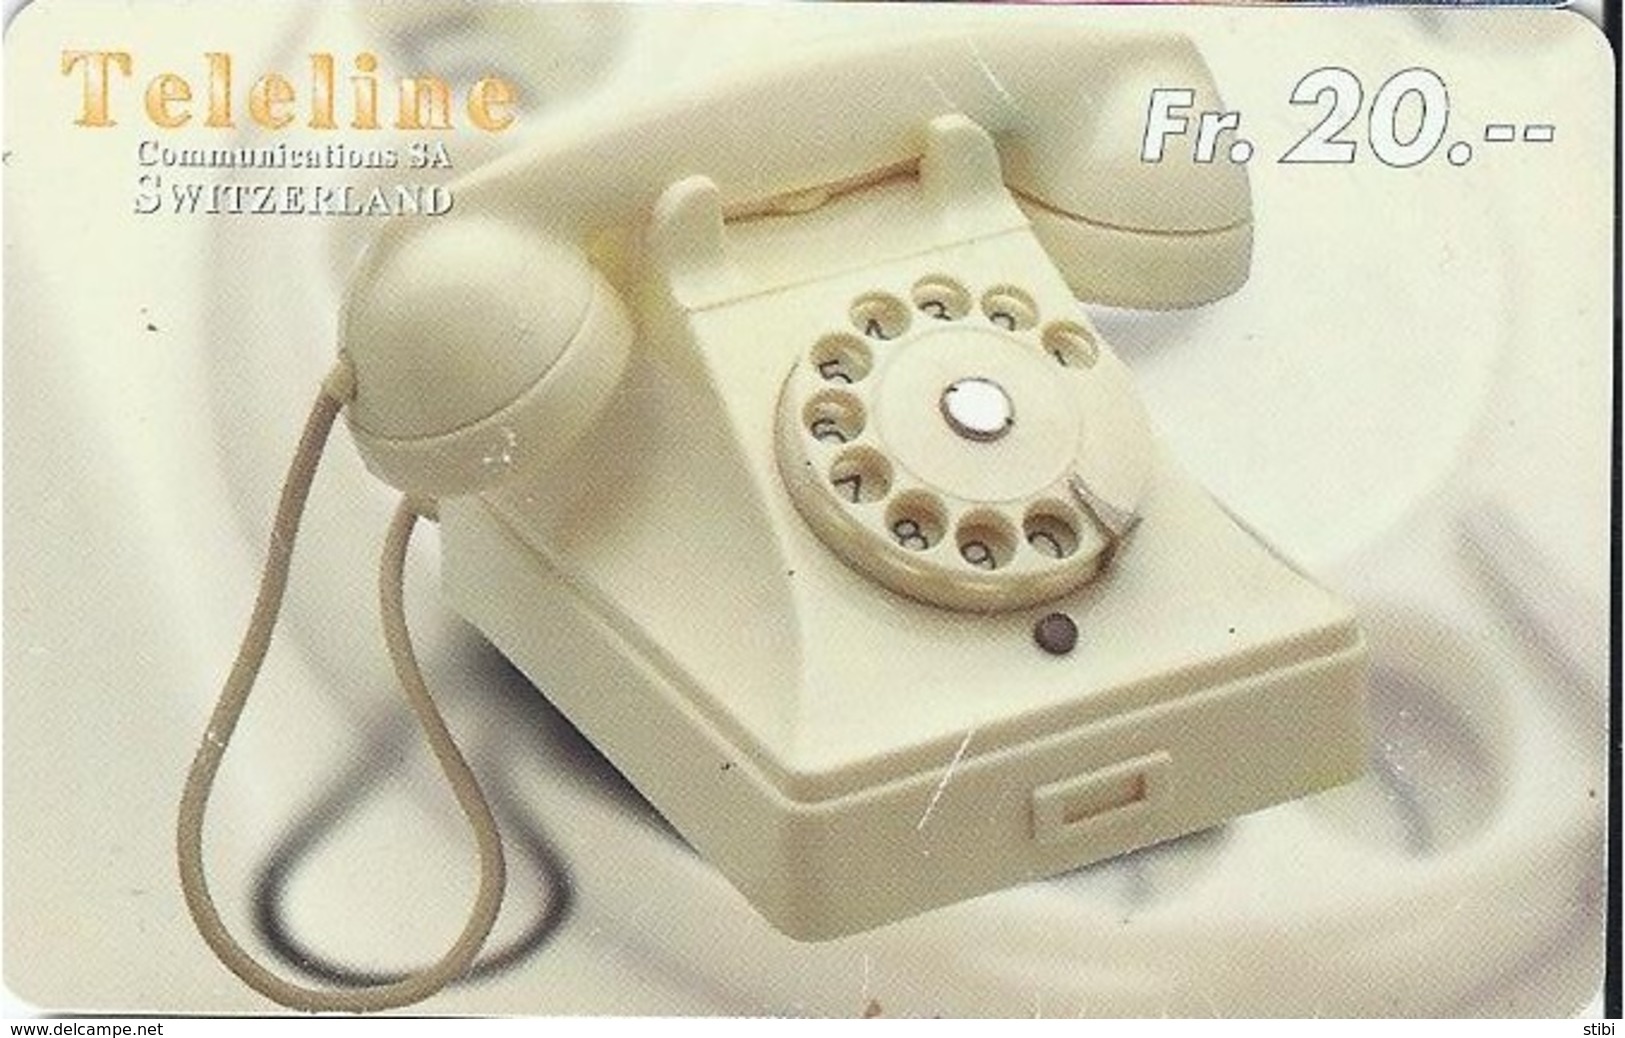 SWITZERLAND - TELELINE - TELEPHONE 4 - Surinam